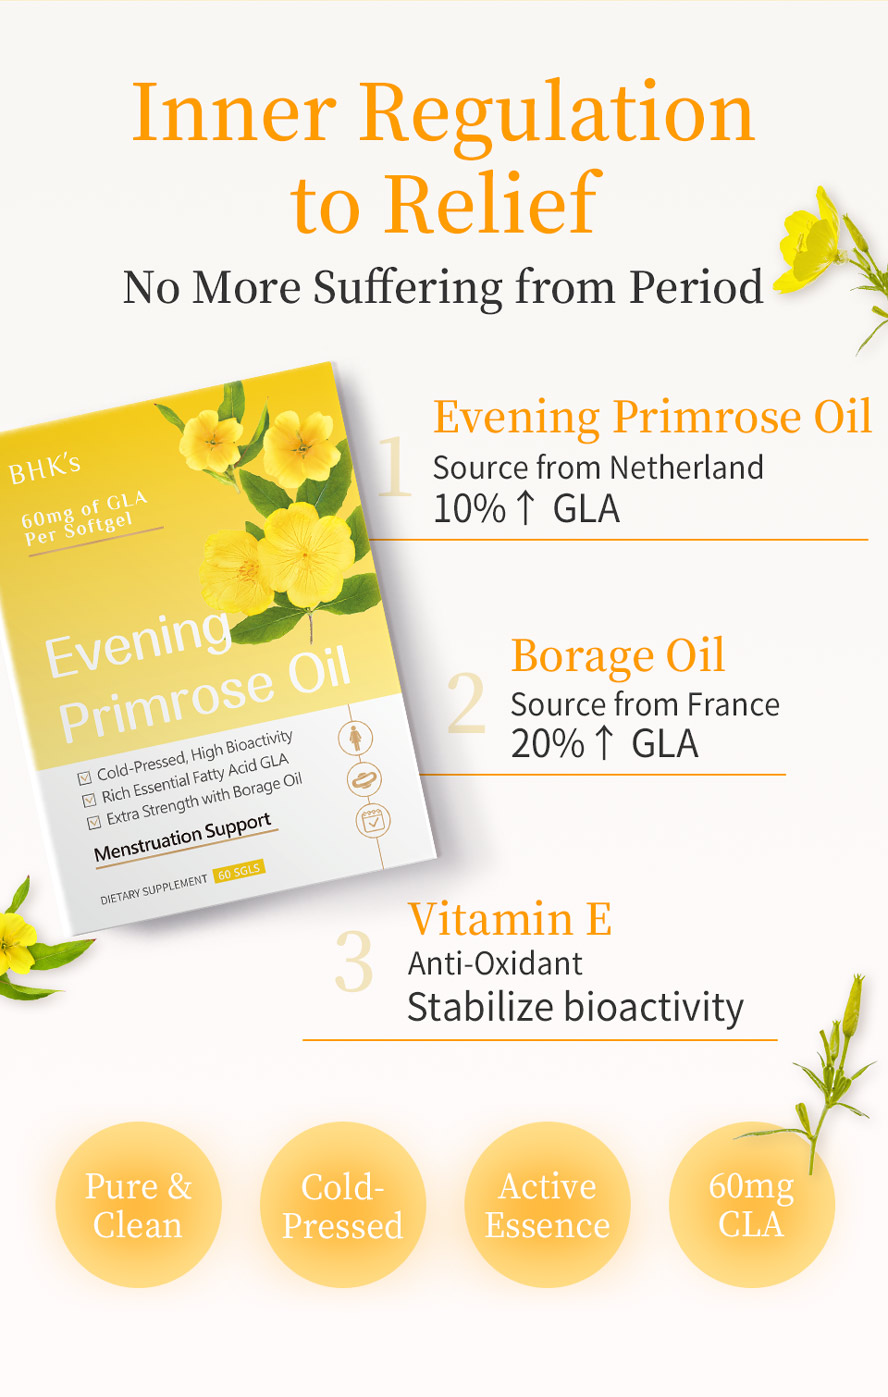 BHK's EveningPrimrose provide nutritients like Evening Primrose Oil, Borage Oil, and Vitamin E